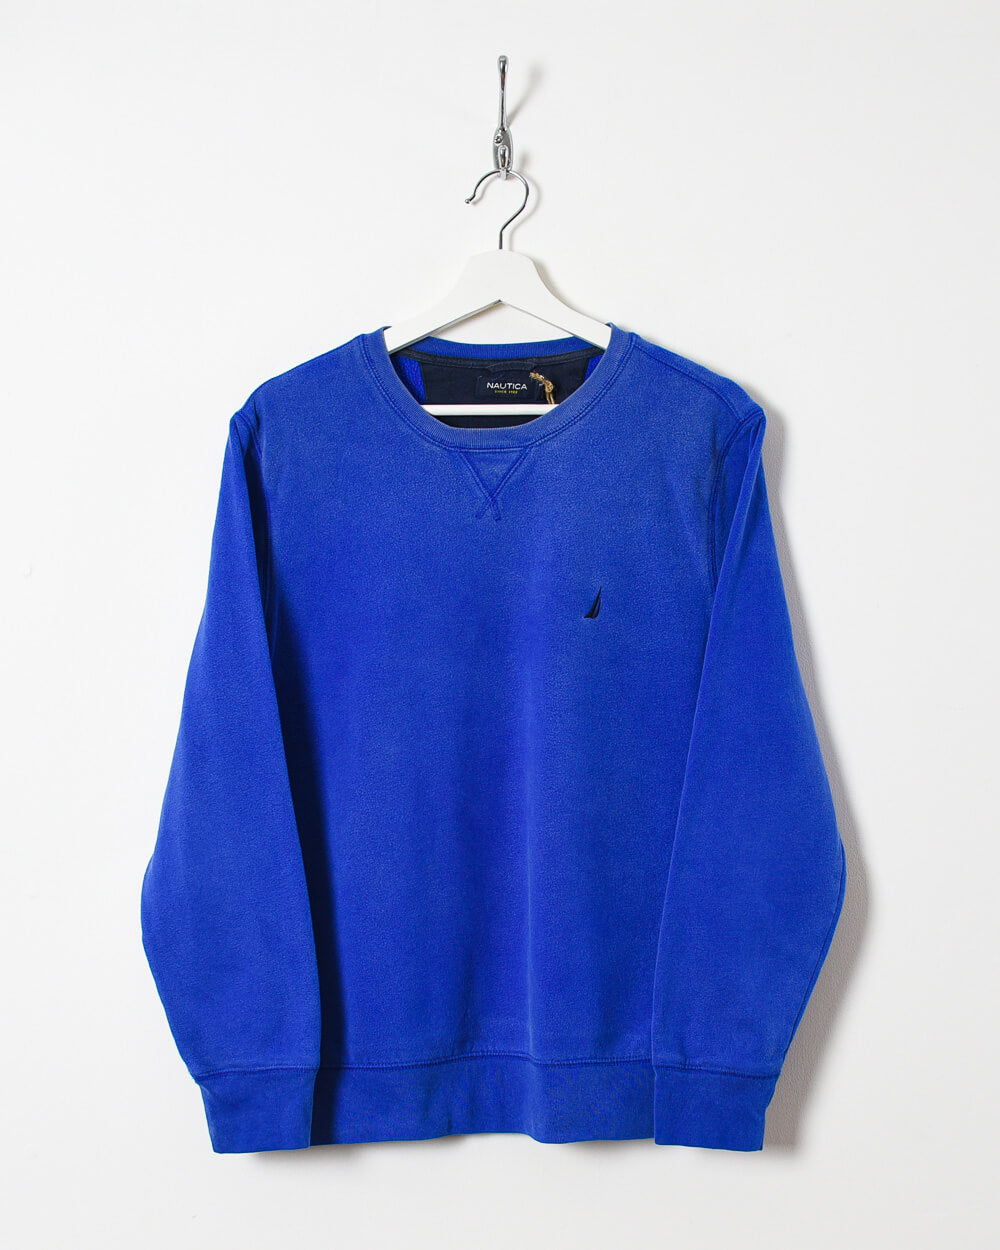 Blue Nautica Sweatshirt - Small